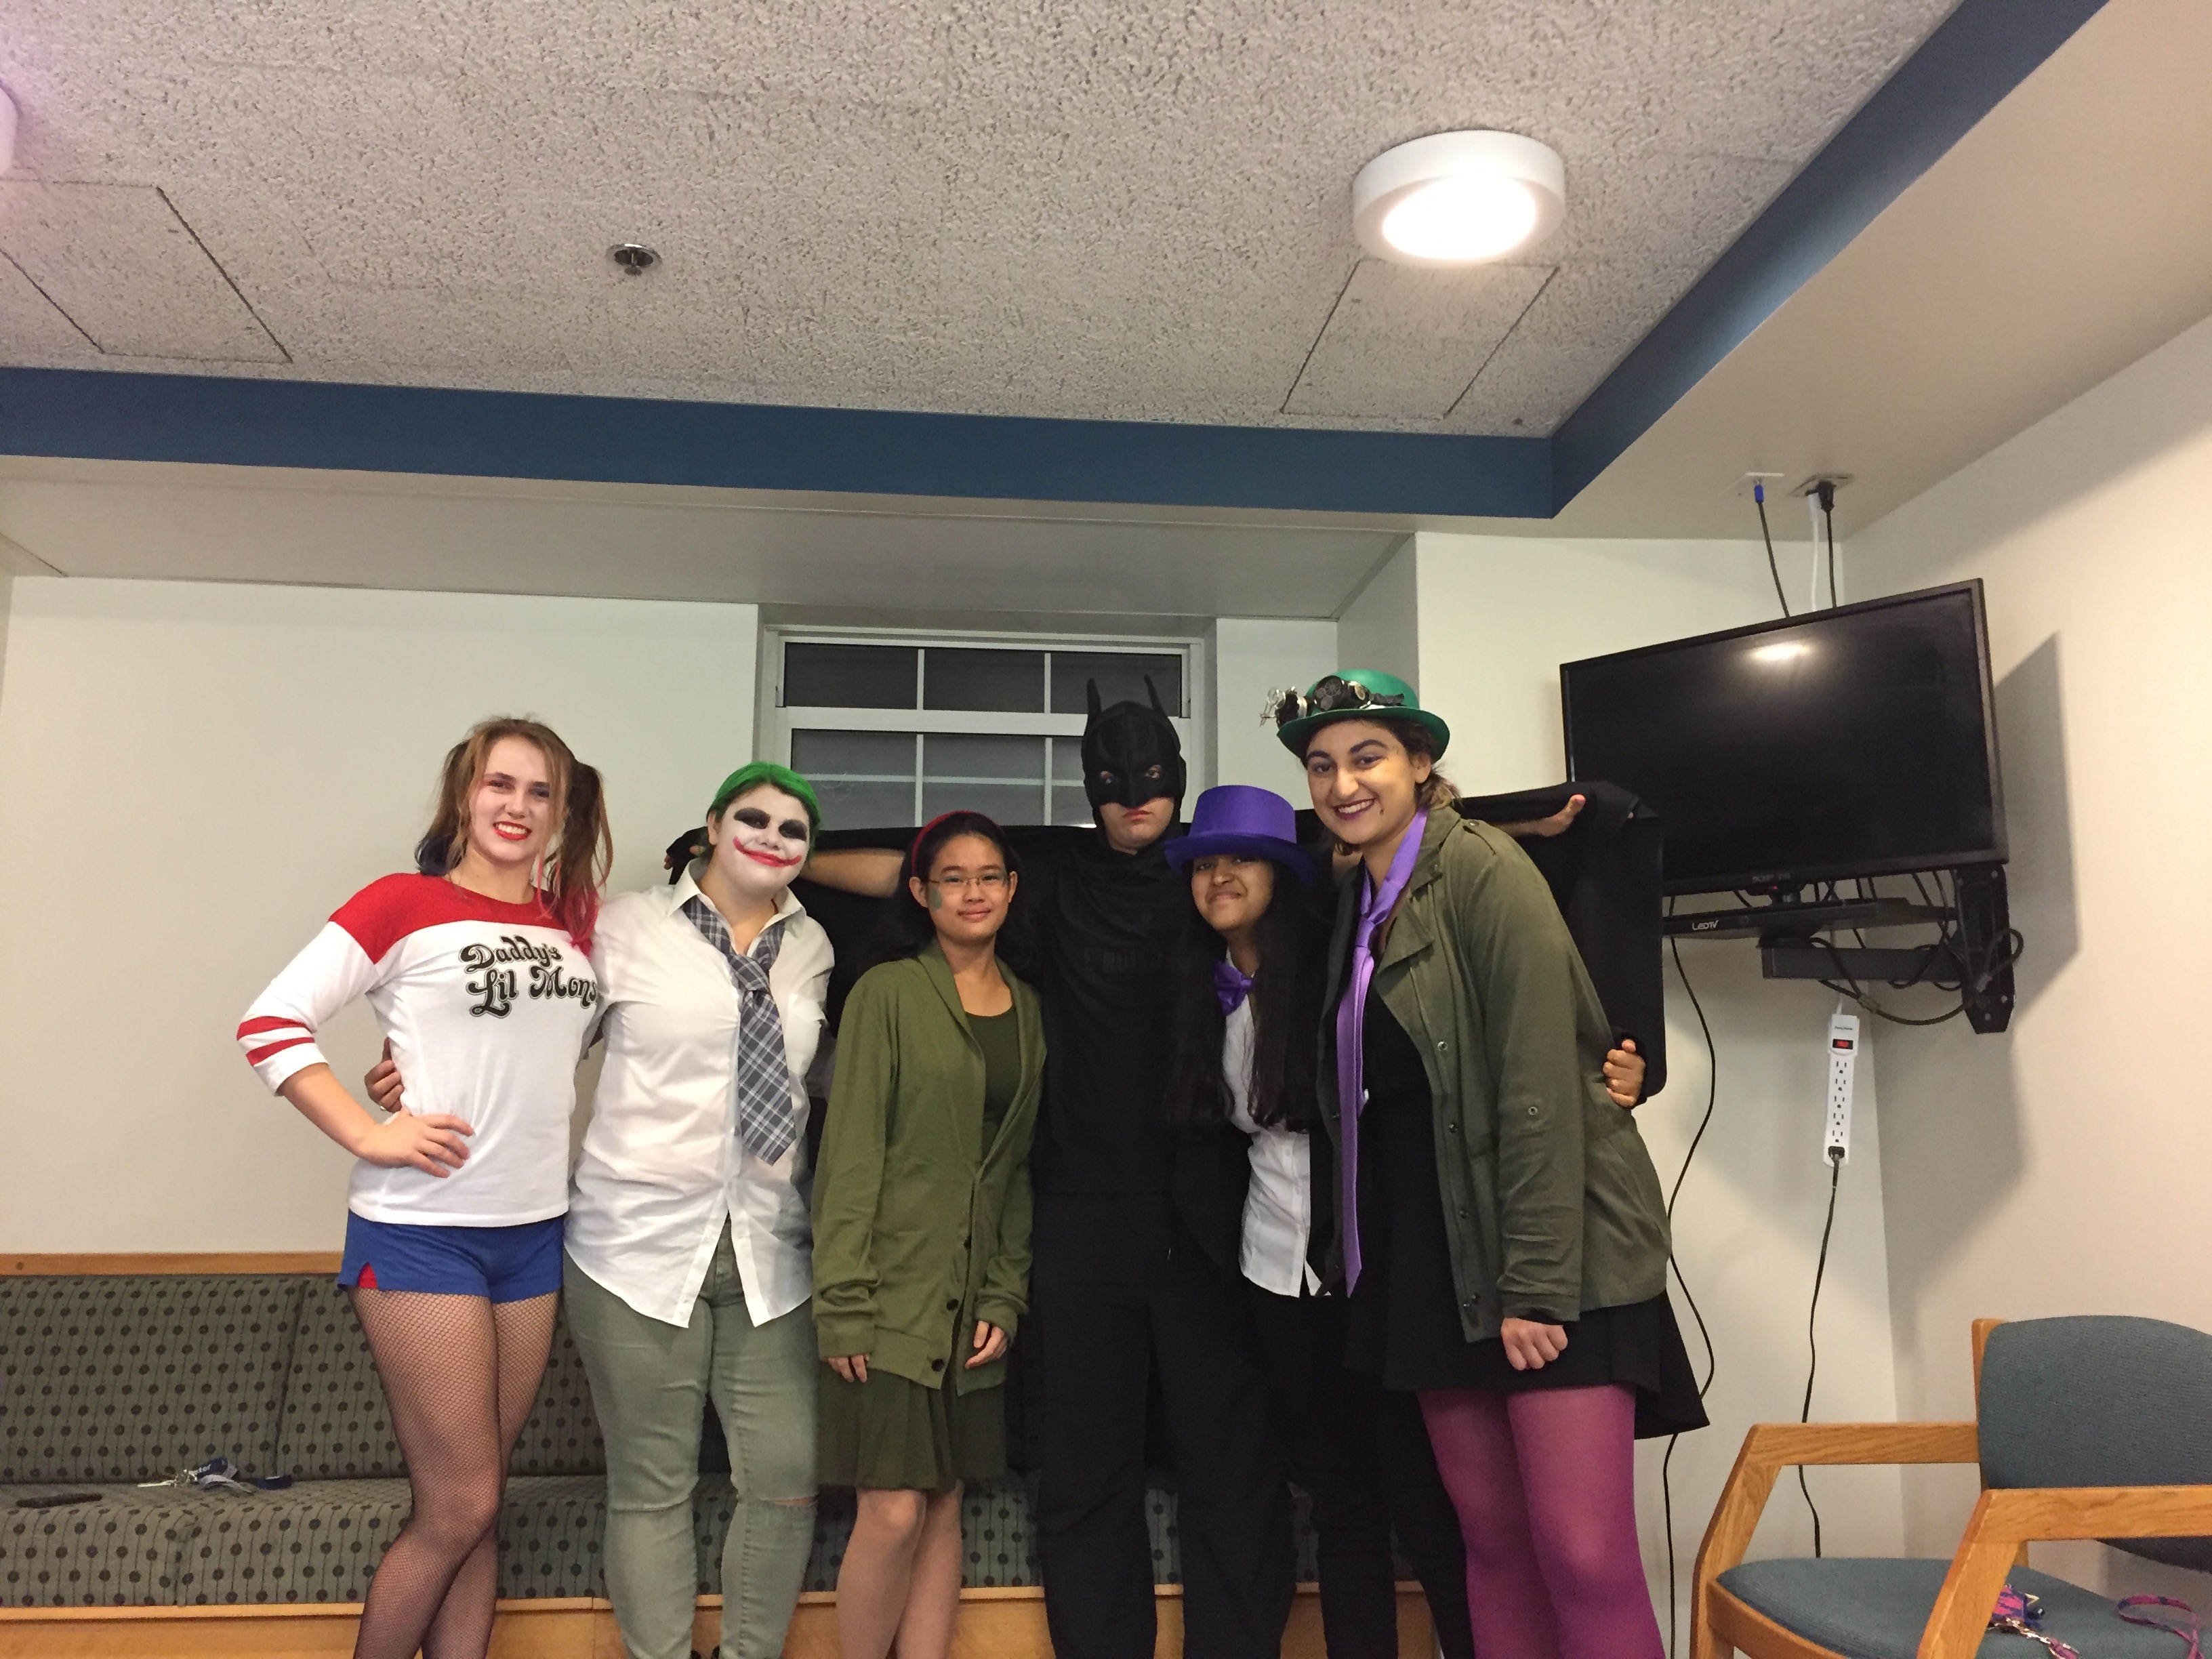 The Batman Squad!